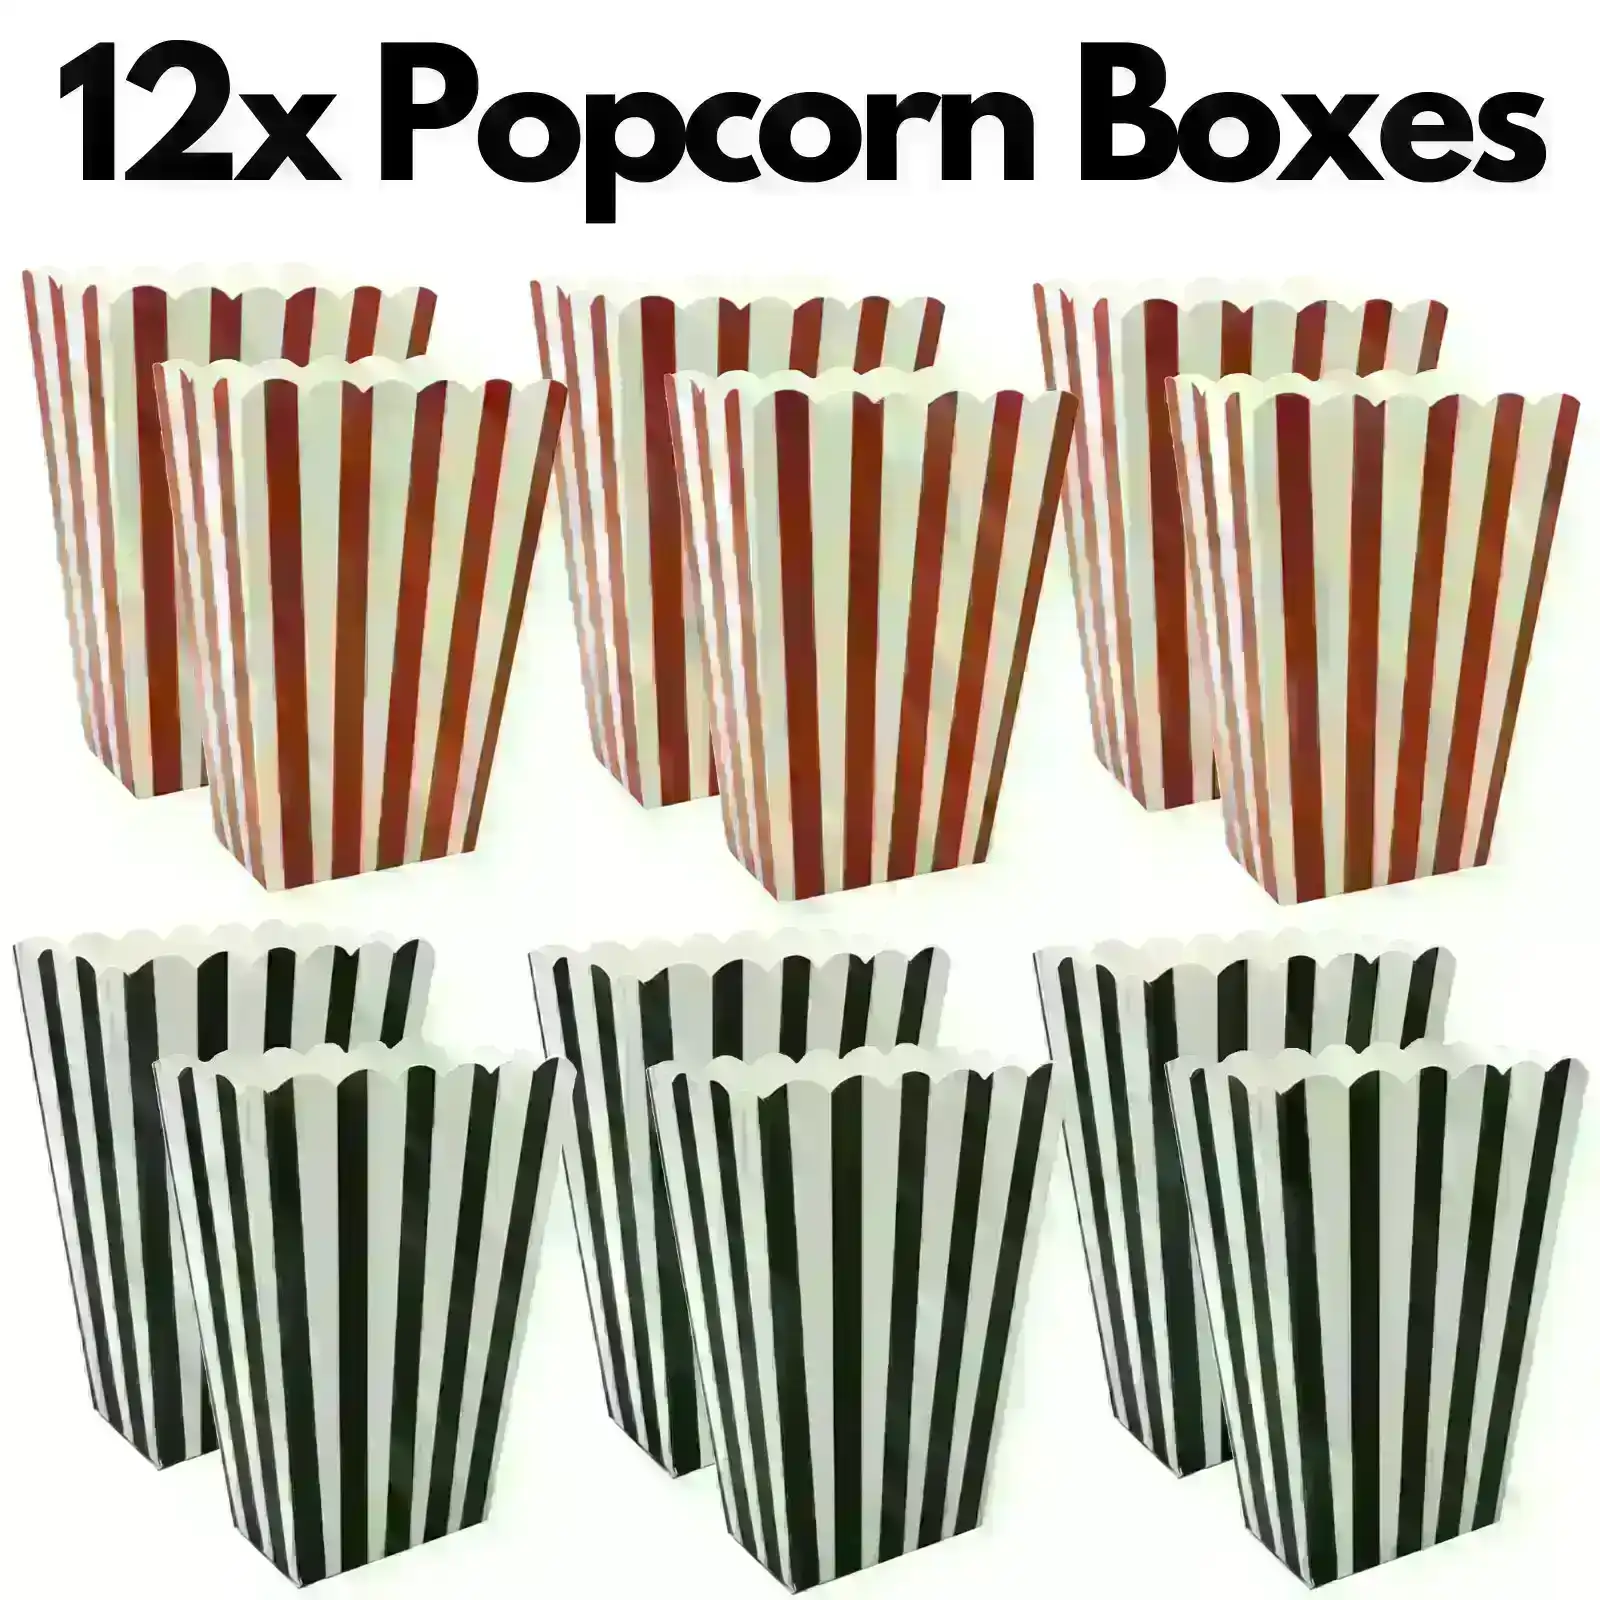 12x Popcorn Boxes Wedding Party Favour Lolly Box Retro Cinema Pop Corn Black Red